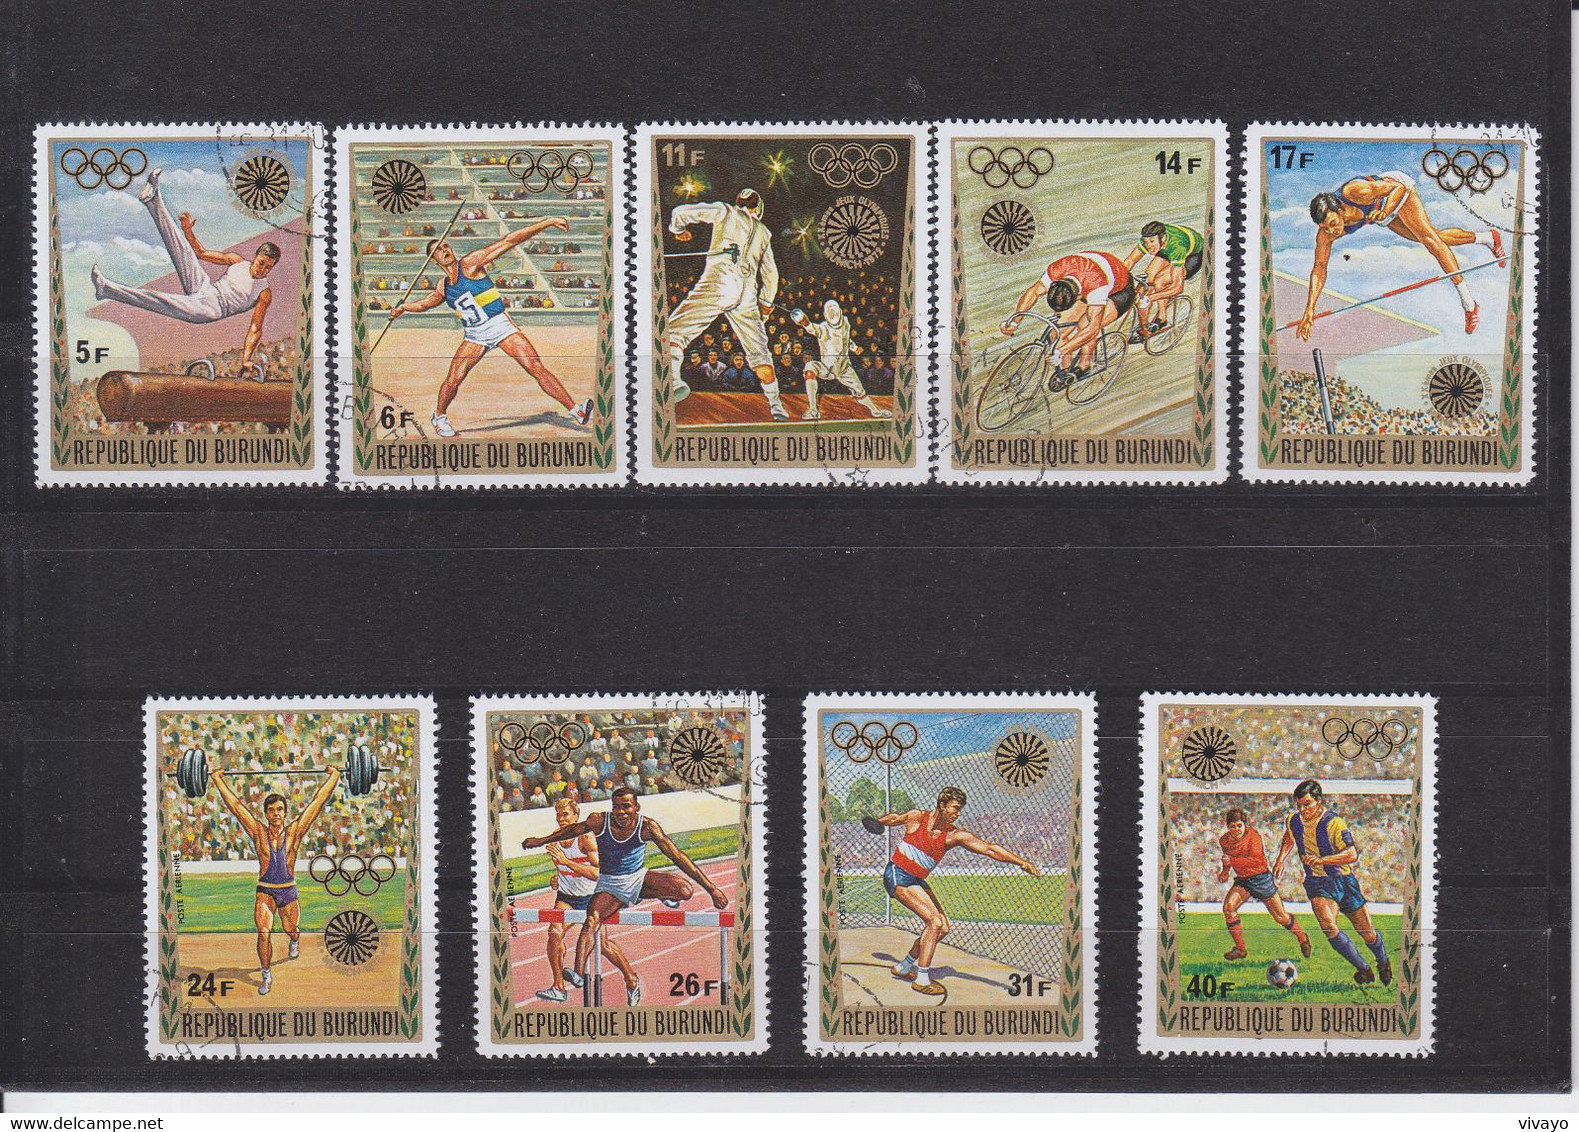 BURUNDI - 1972 - O / FINE CANCELLED - OLYMPICS MUNICH - JEUX OLYMPIQUES MUNICH   Mi. 858/66 - Used Stamps